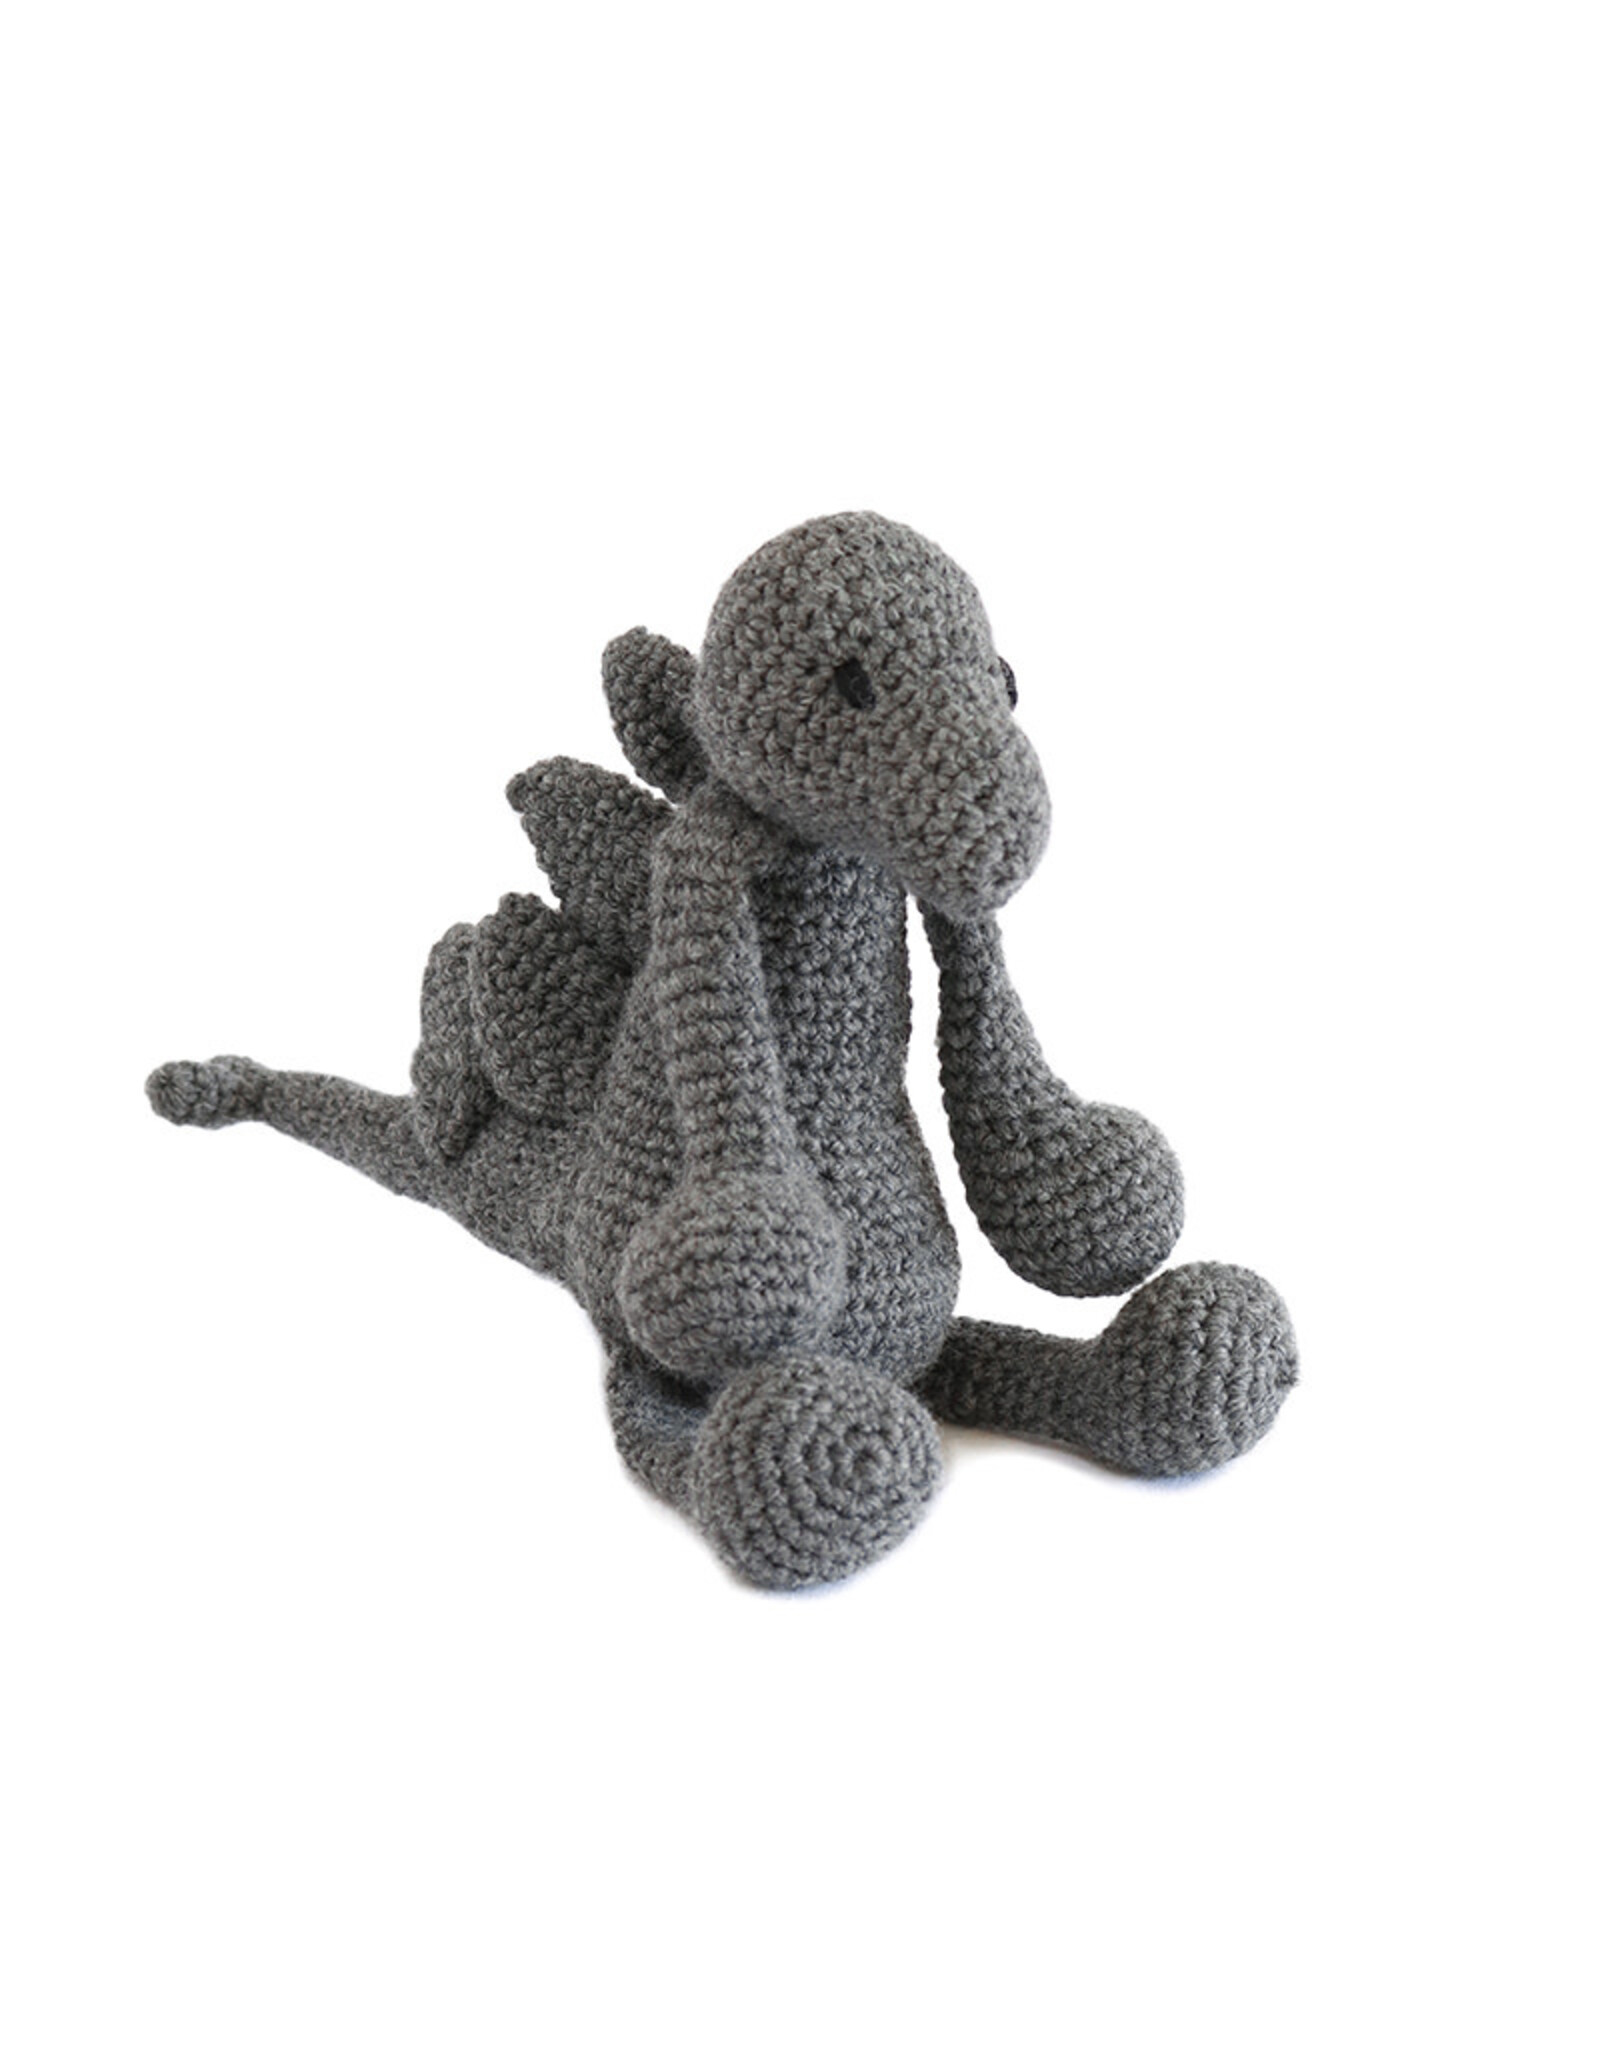 Toft Animal Crochet Kit- Stanley The Stegosarus - fibre space